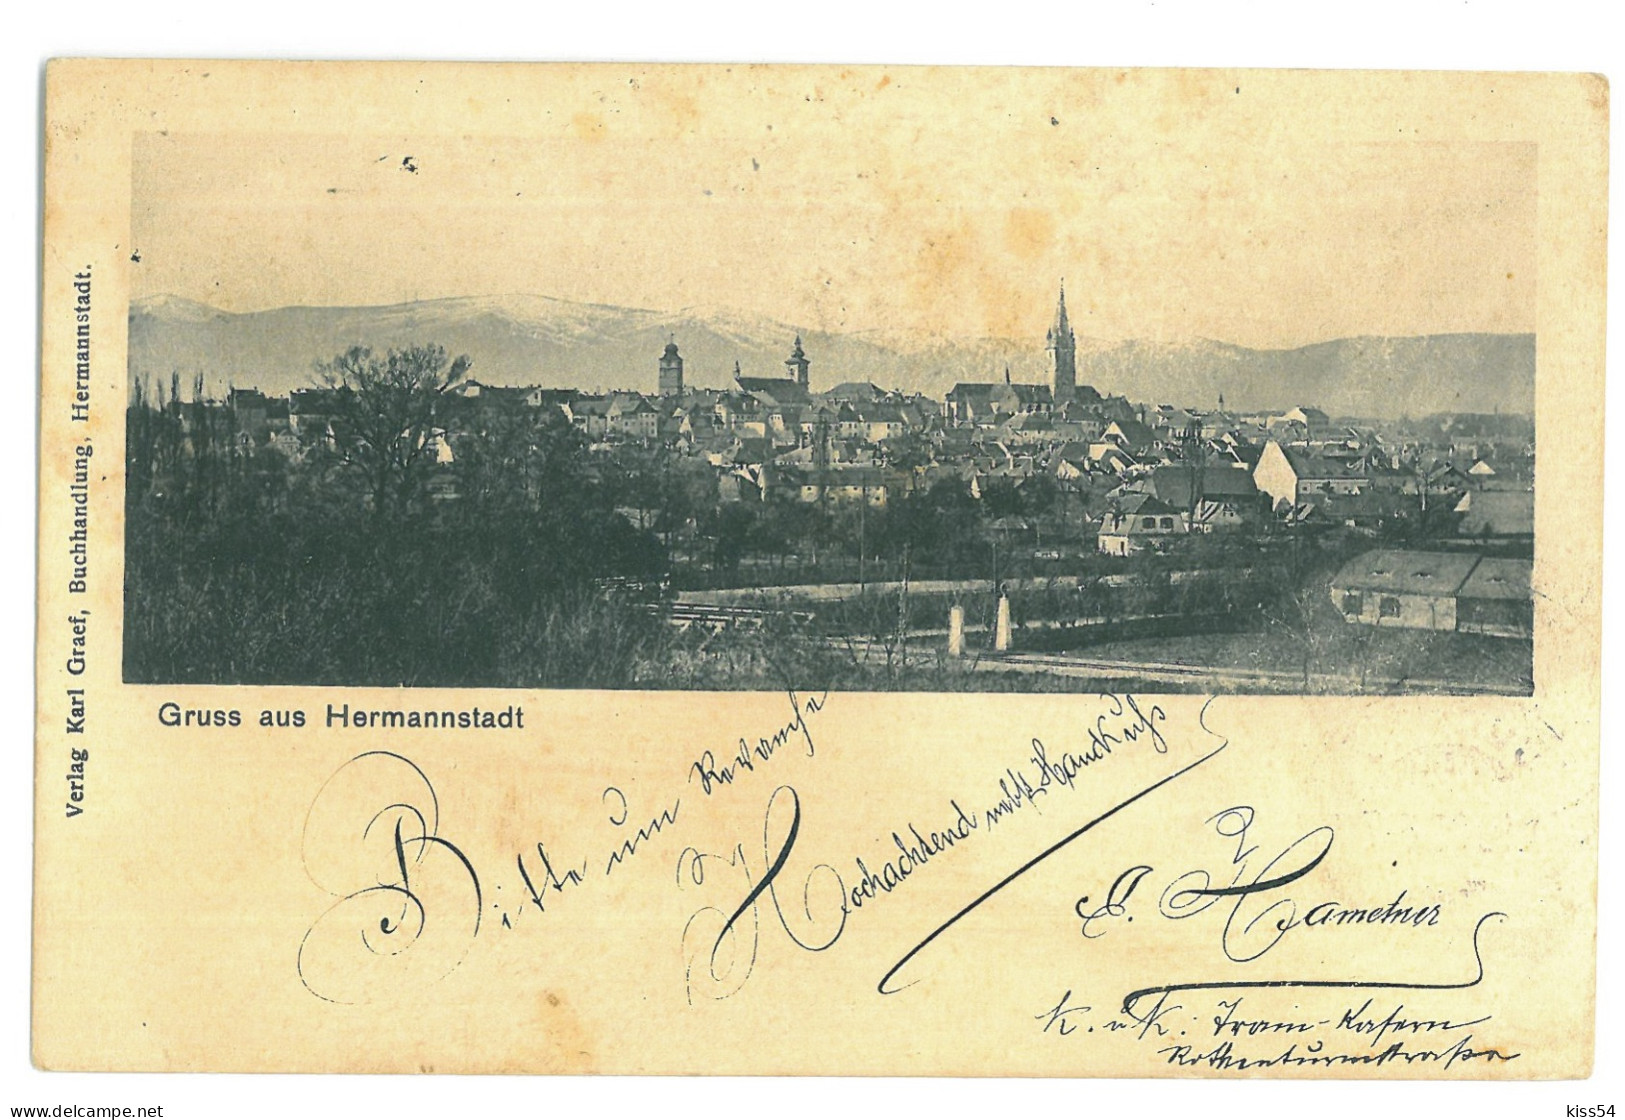 RO 69 - 22439 SIBIU, Panorama, Litho, Romania - Old Postcard - Used - 1903 - Romania